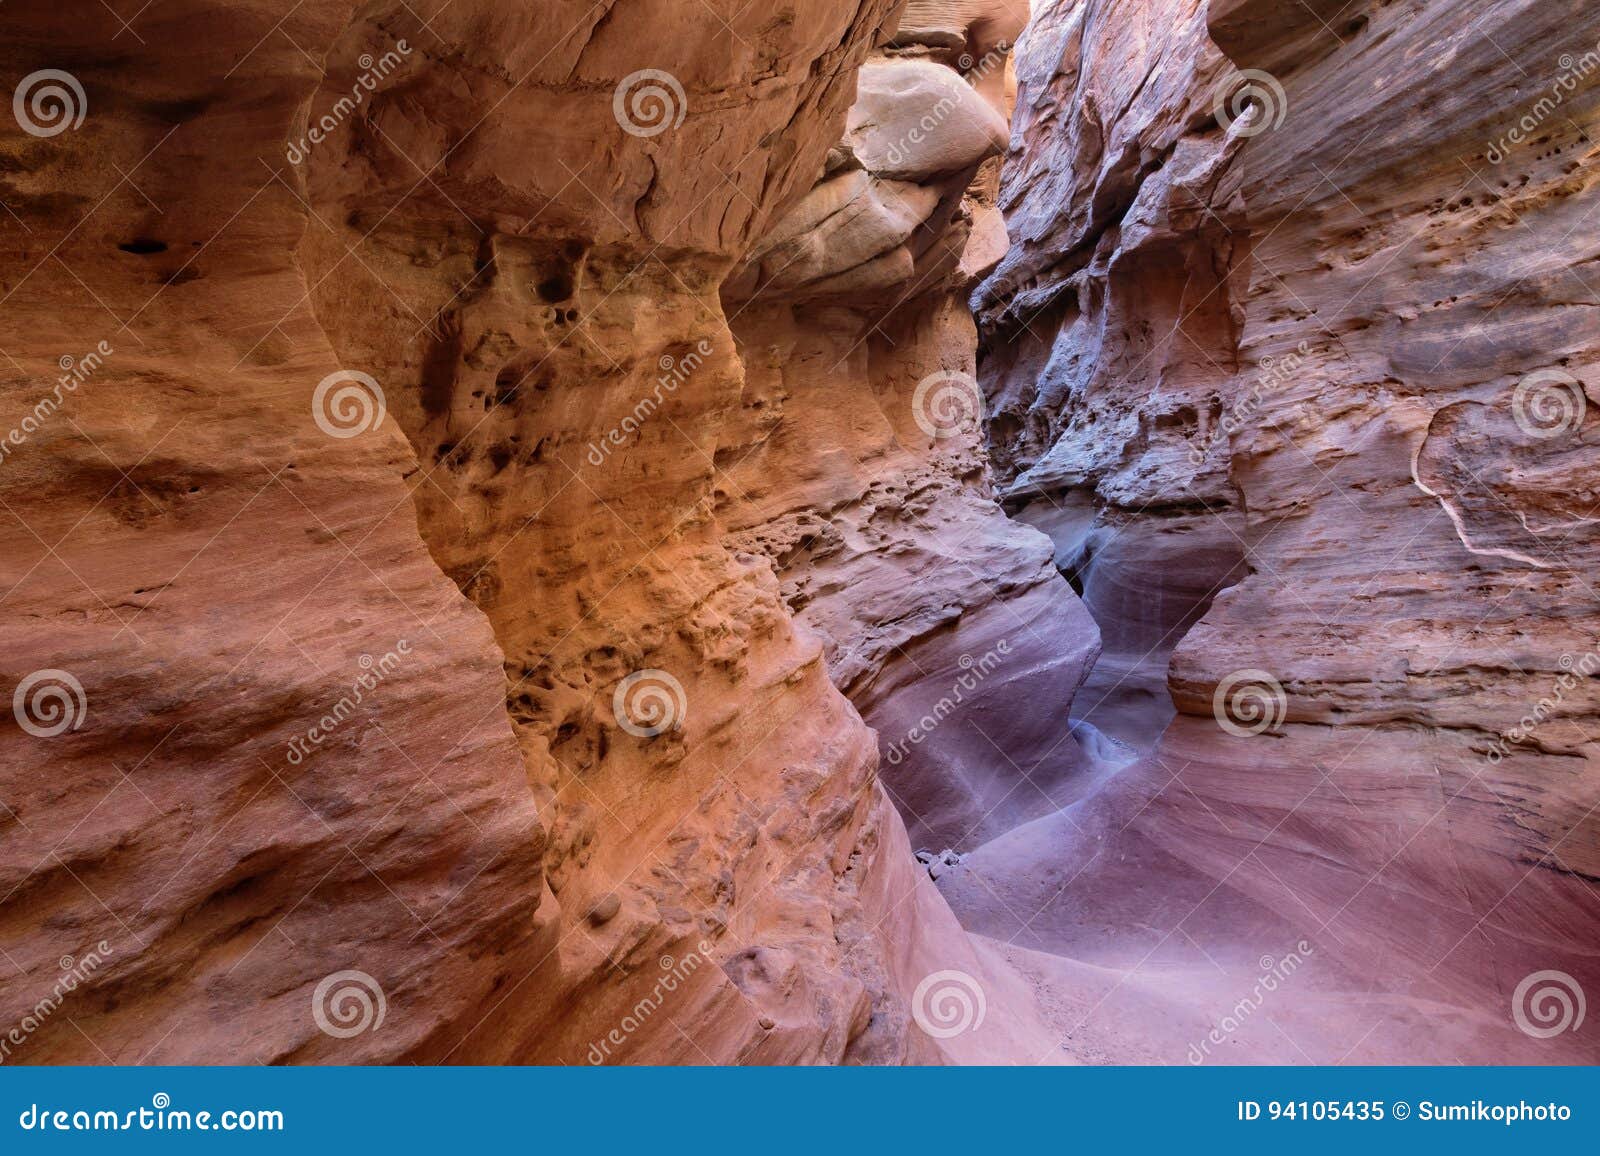 little wildhorse canyon